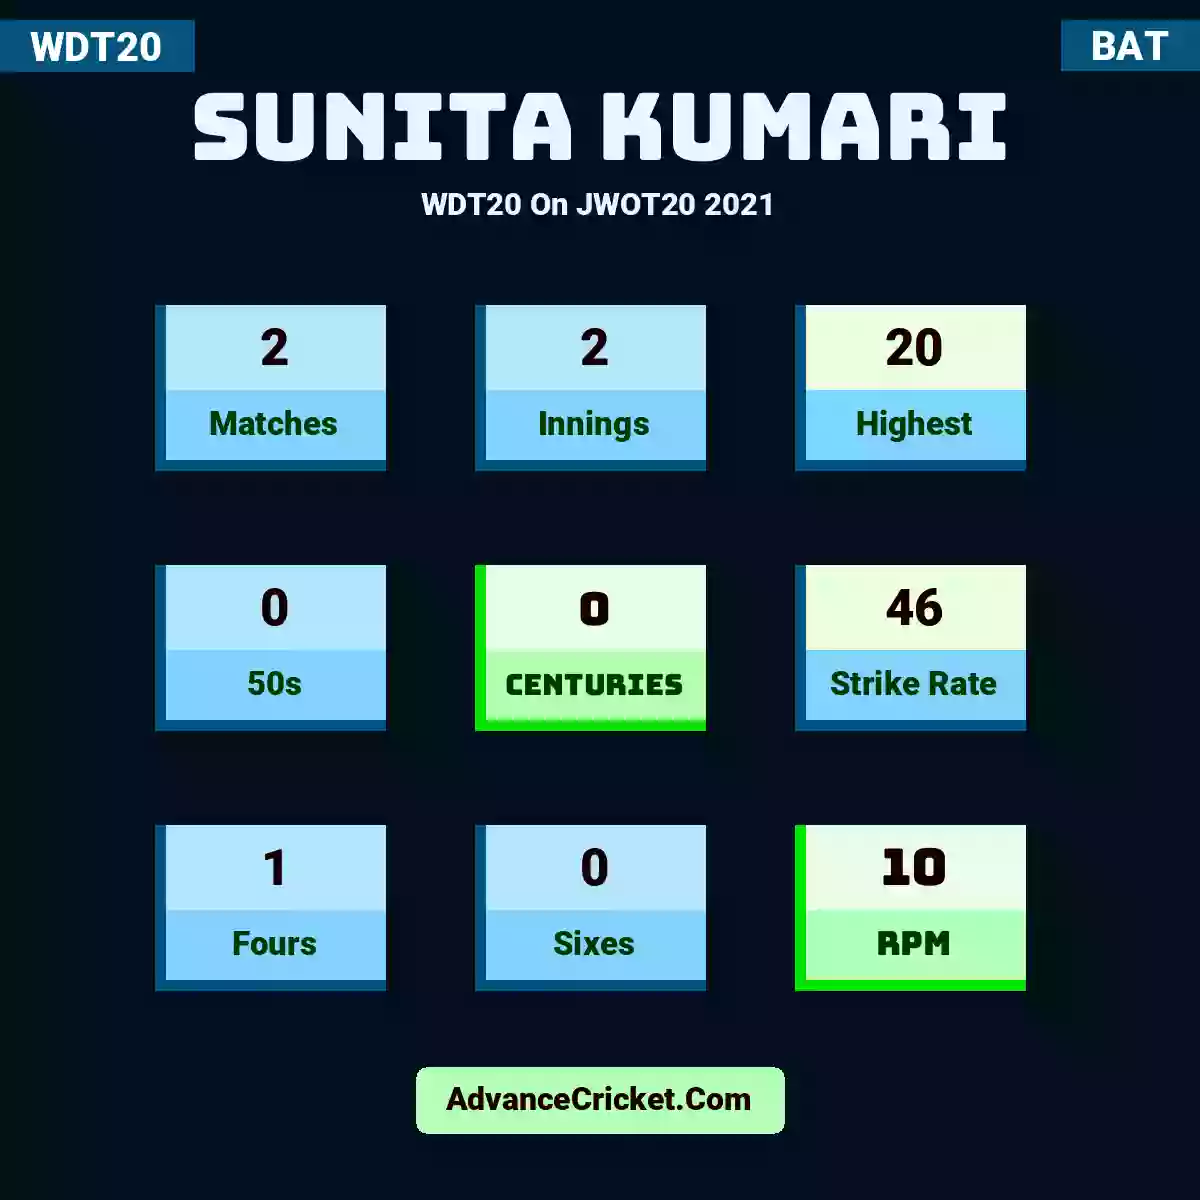 Sunita Kumari WDT20  On JWOT20 2021, Sunita Kumari played 2 matches, scored 20 runs as highest, 0 half-centuries, and 0 centuries, with a strike rate of 46. S.Kumari hit 1 fours and 0 sixes, with an RPM of 10.